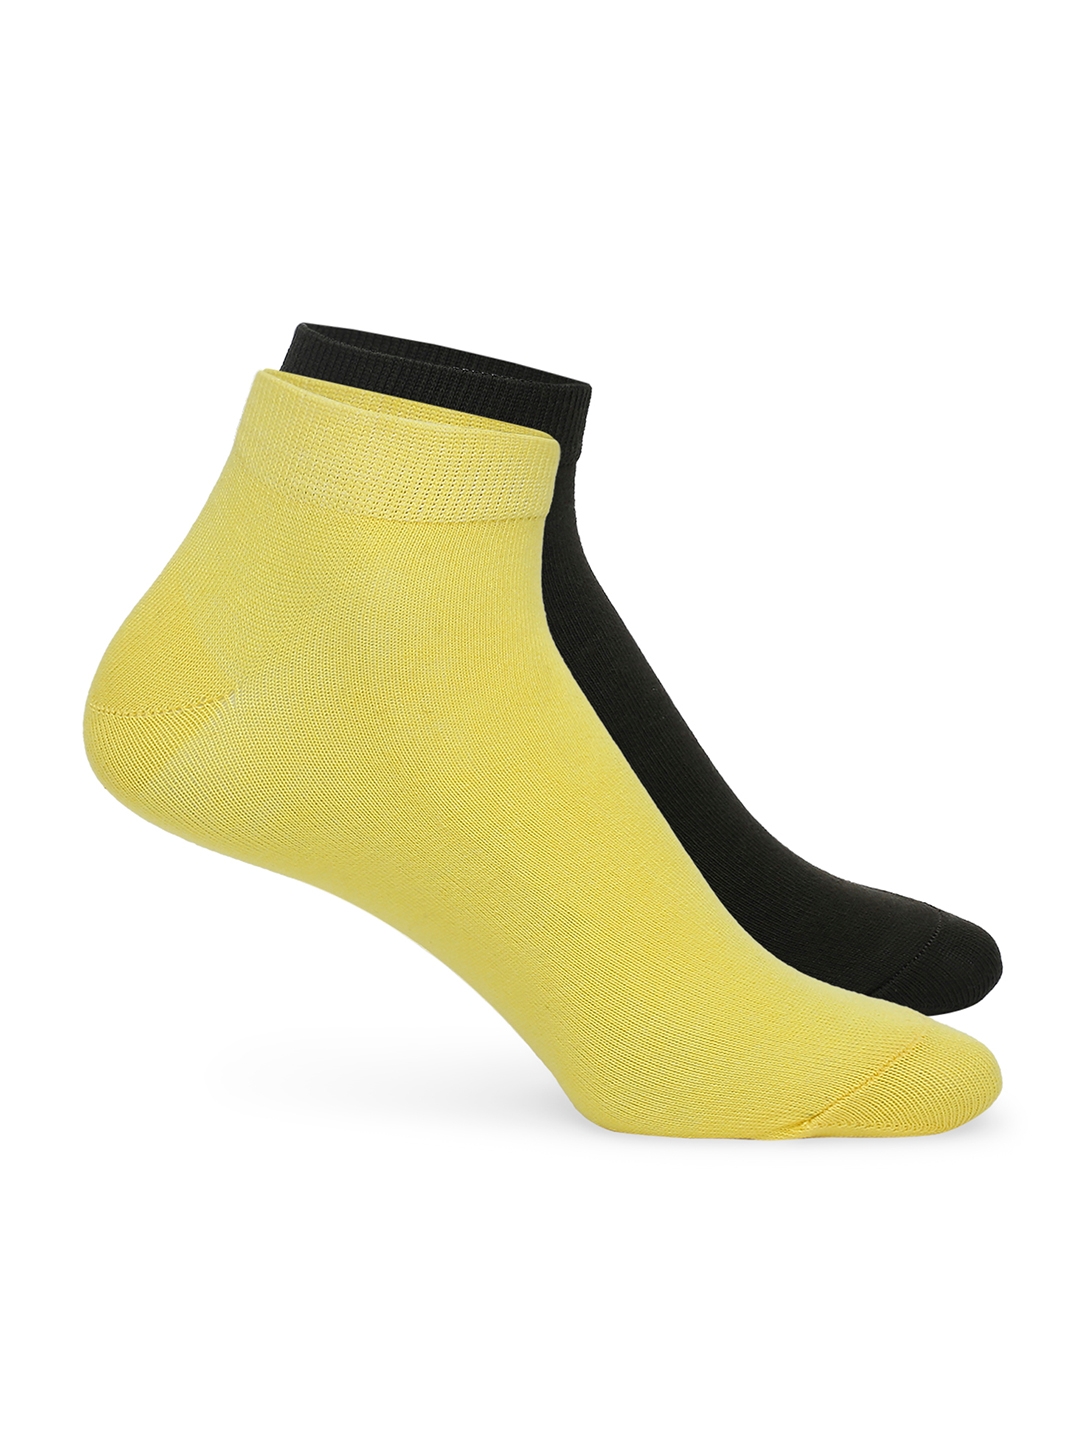 Underjeans By Spykar Men Olive & Yellow Cotton Blend Sneaker Socks - Pack Of 2